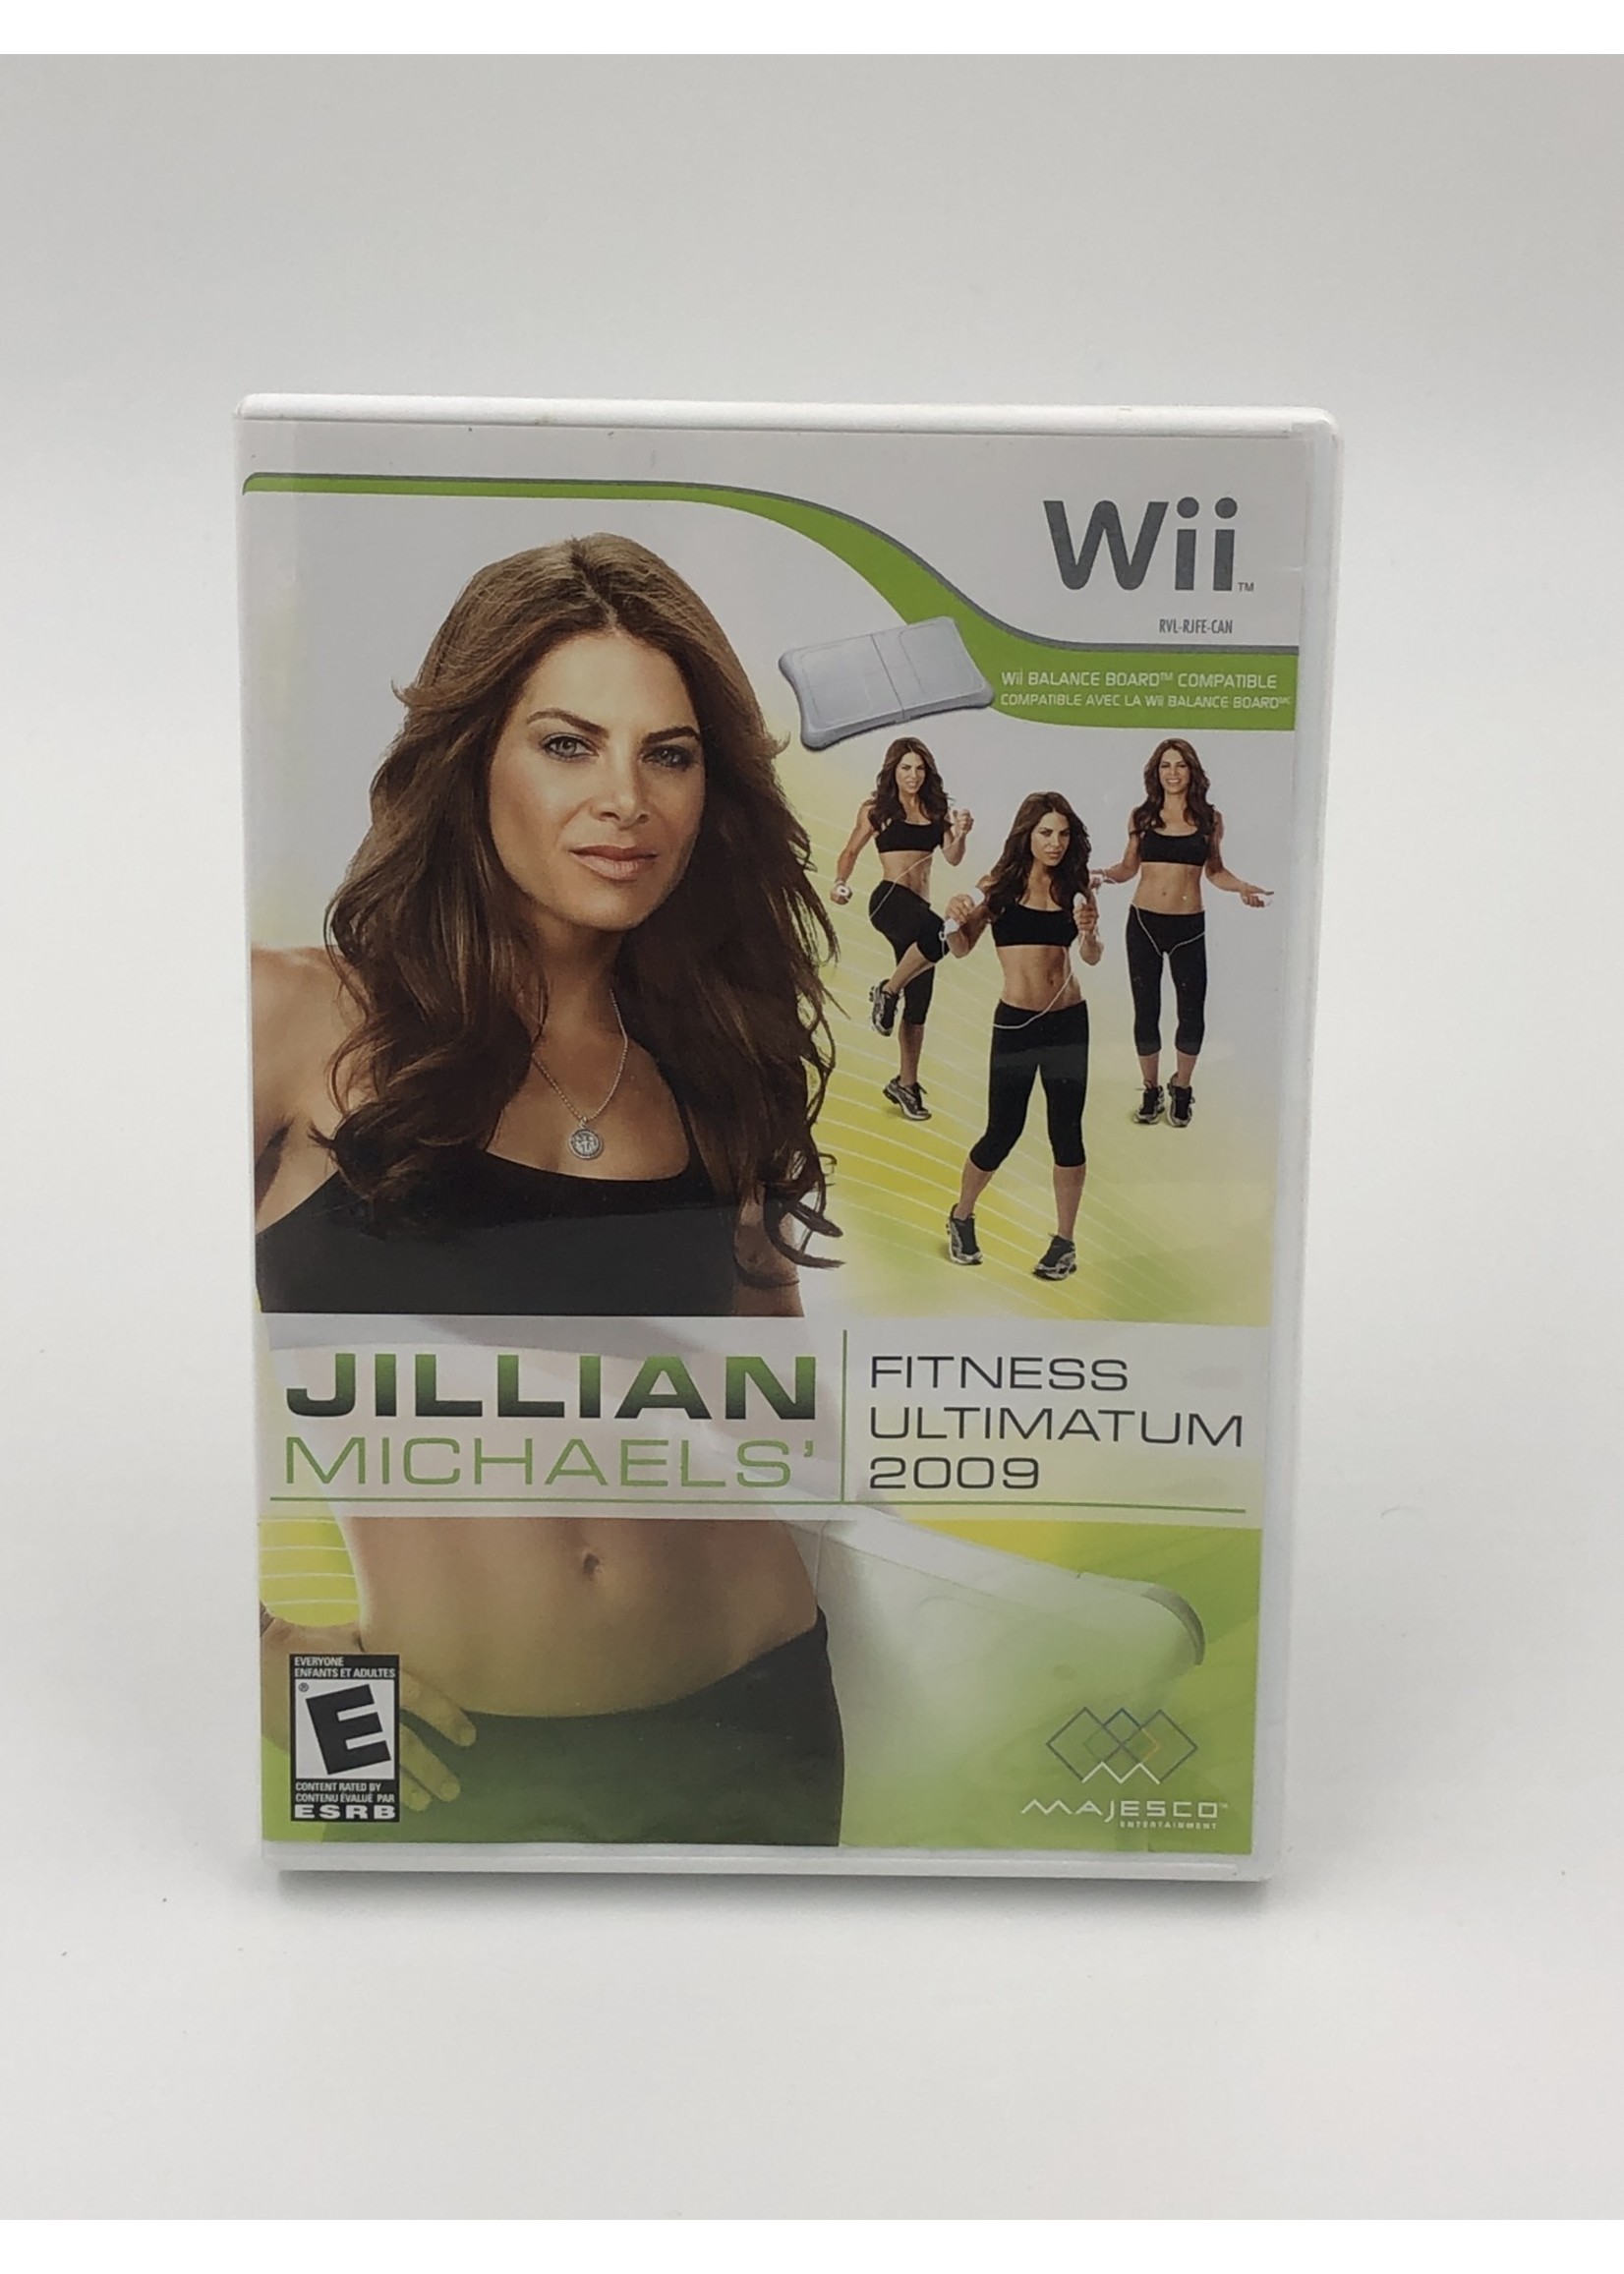 Nintendo   Fitness Ultimatum 2009: Jillian Michaels - Wii